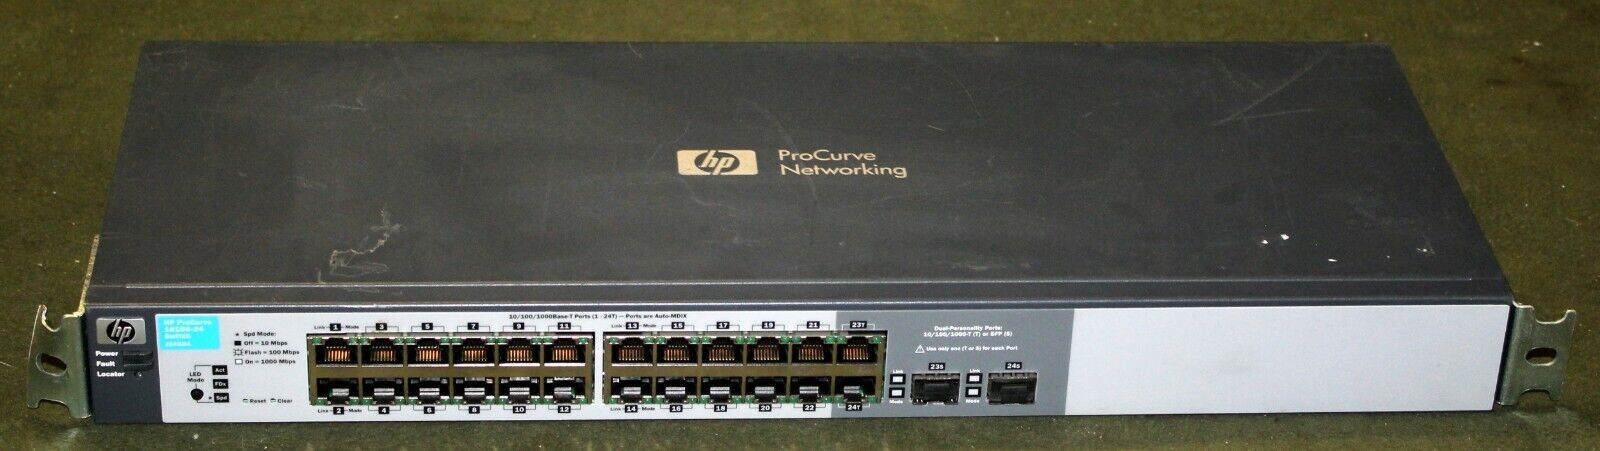 HP J9450A ProCurve 1810G-24 24 x Gigabit Ethernet 2 x SFP Managed Switch